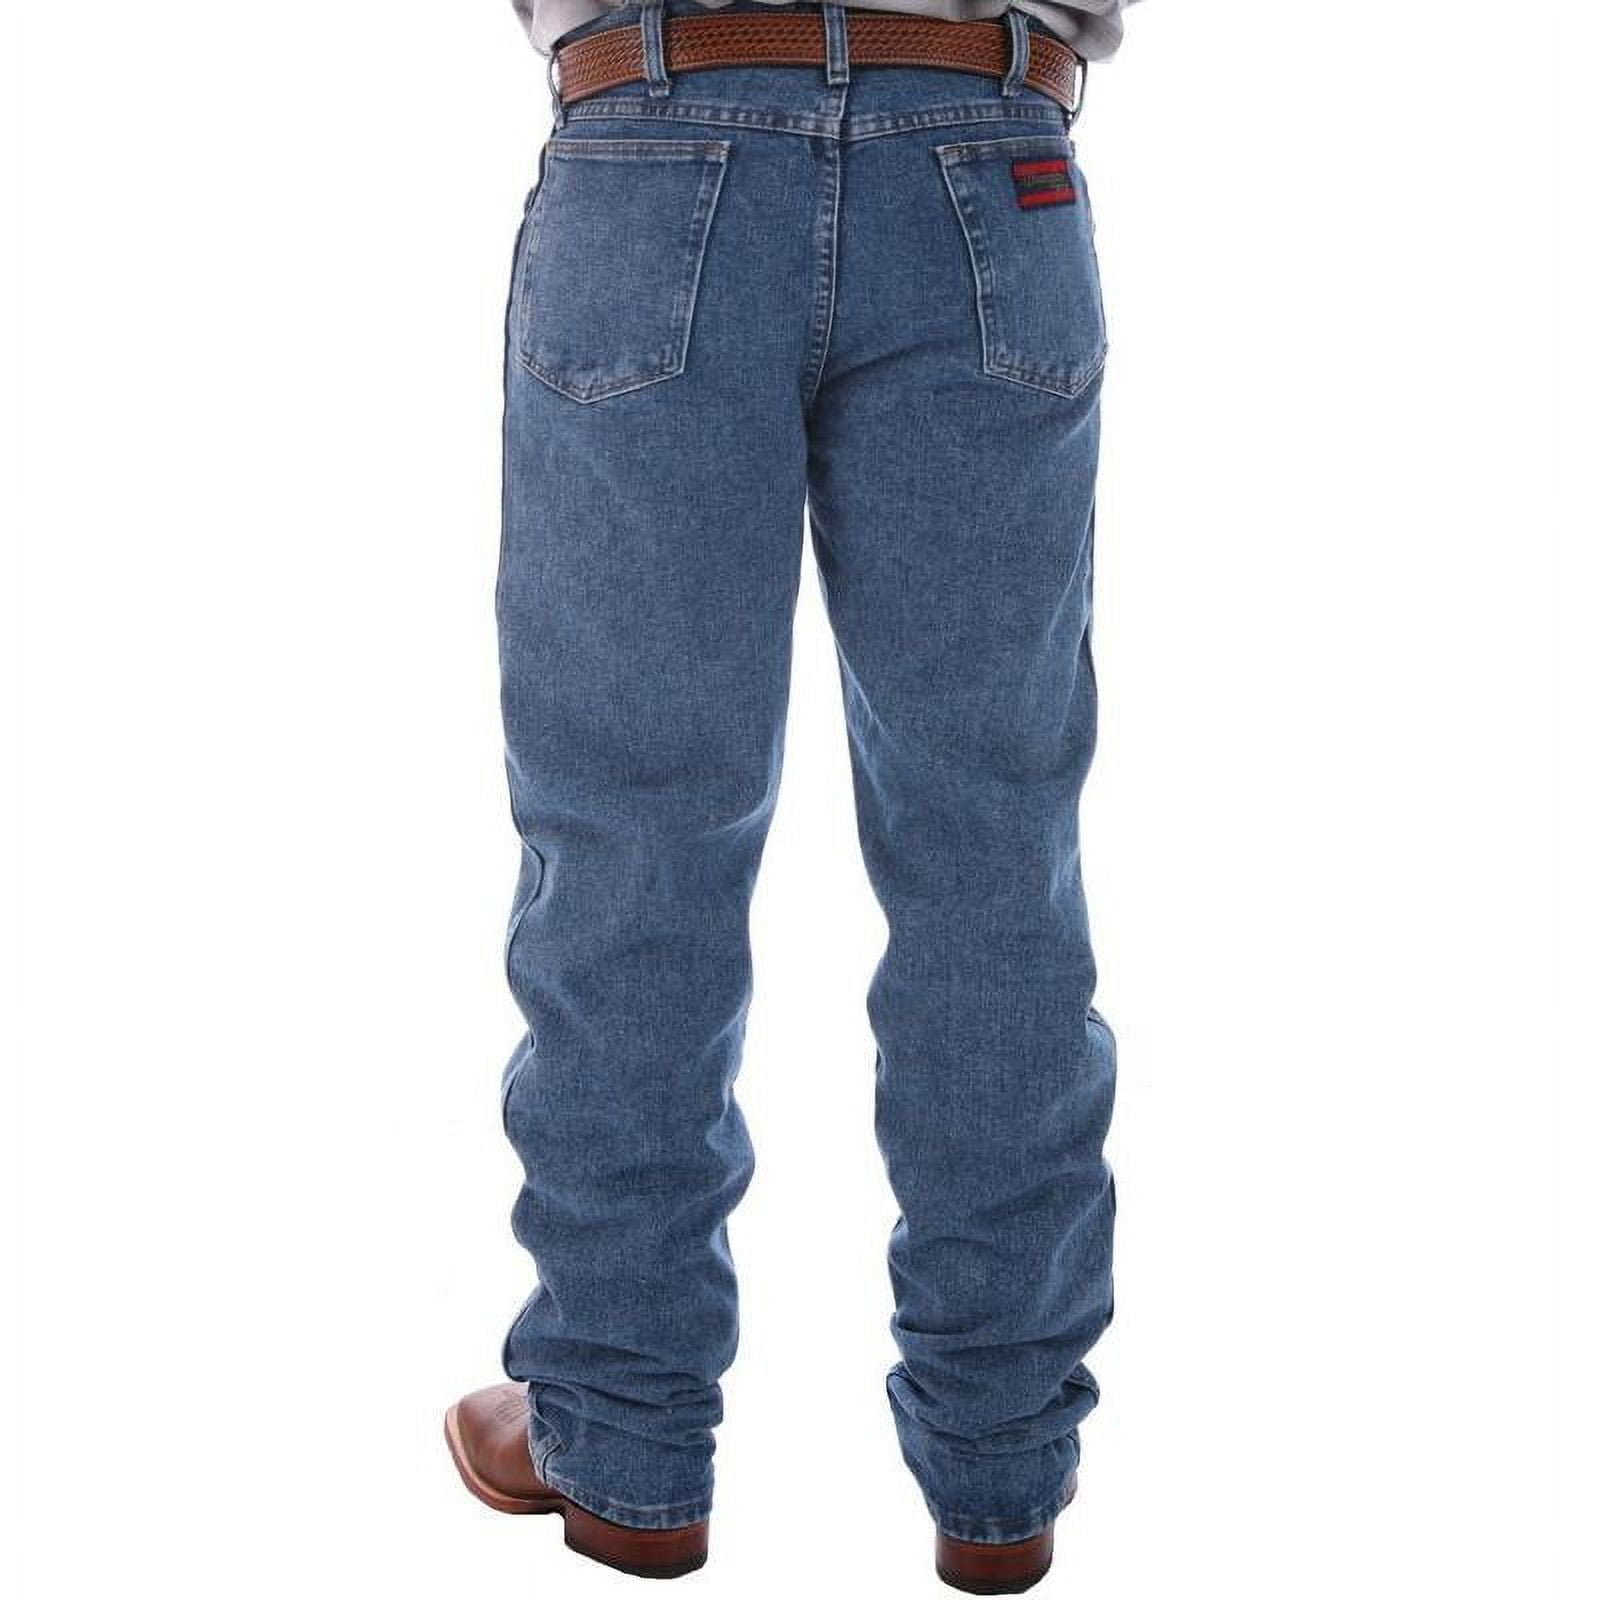 Wrangler Men's Tall 20X Original Fit Jean,Vintage Stonewash,36x38